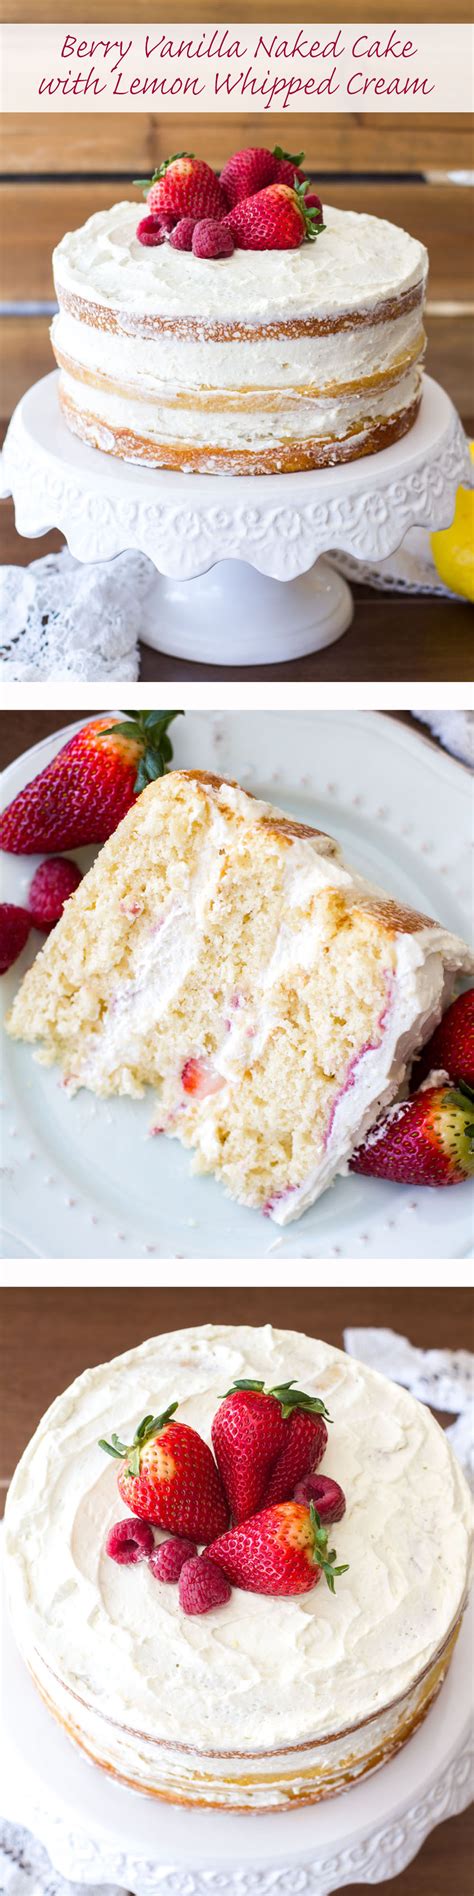 Berry Vanilla Naked Cake With Lemon Whipped Cream Just Desserts Cake